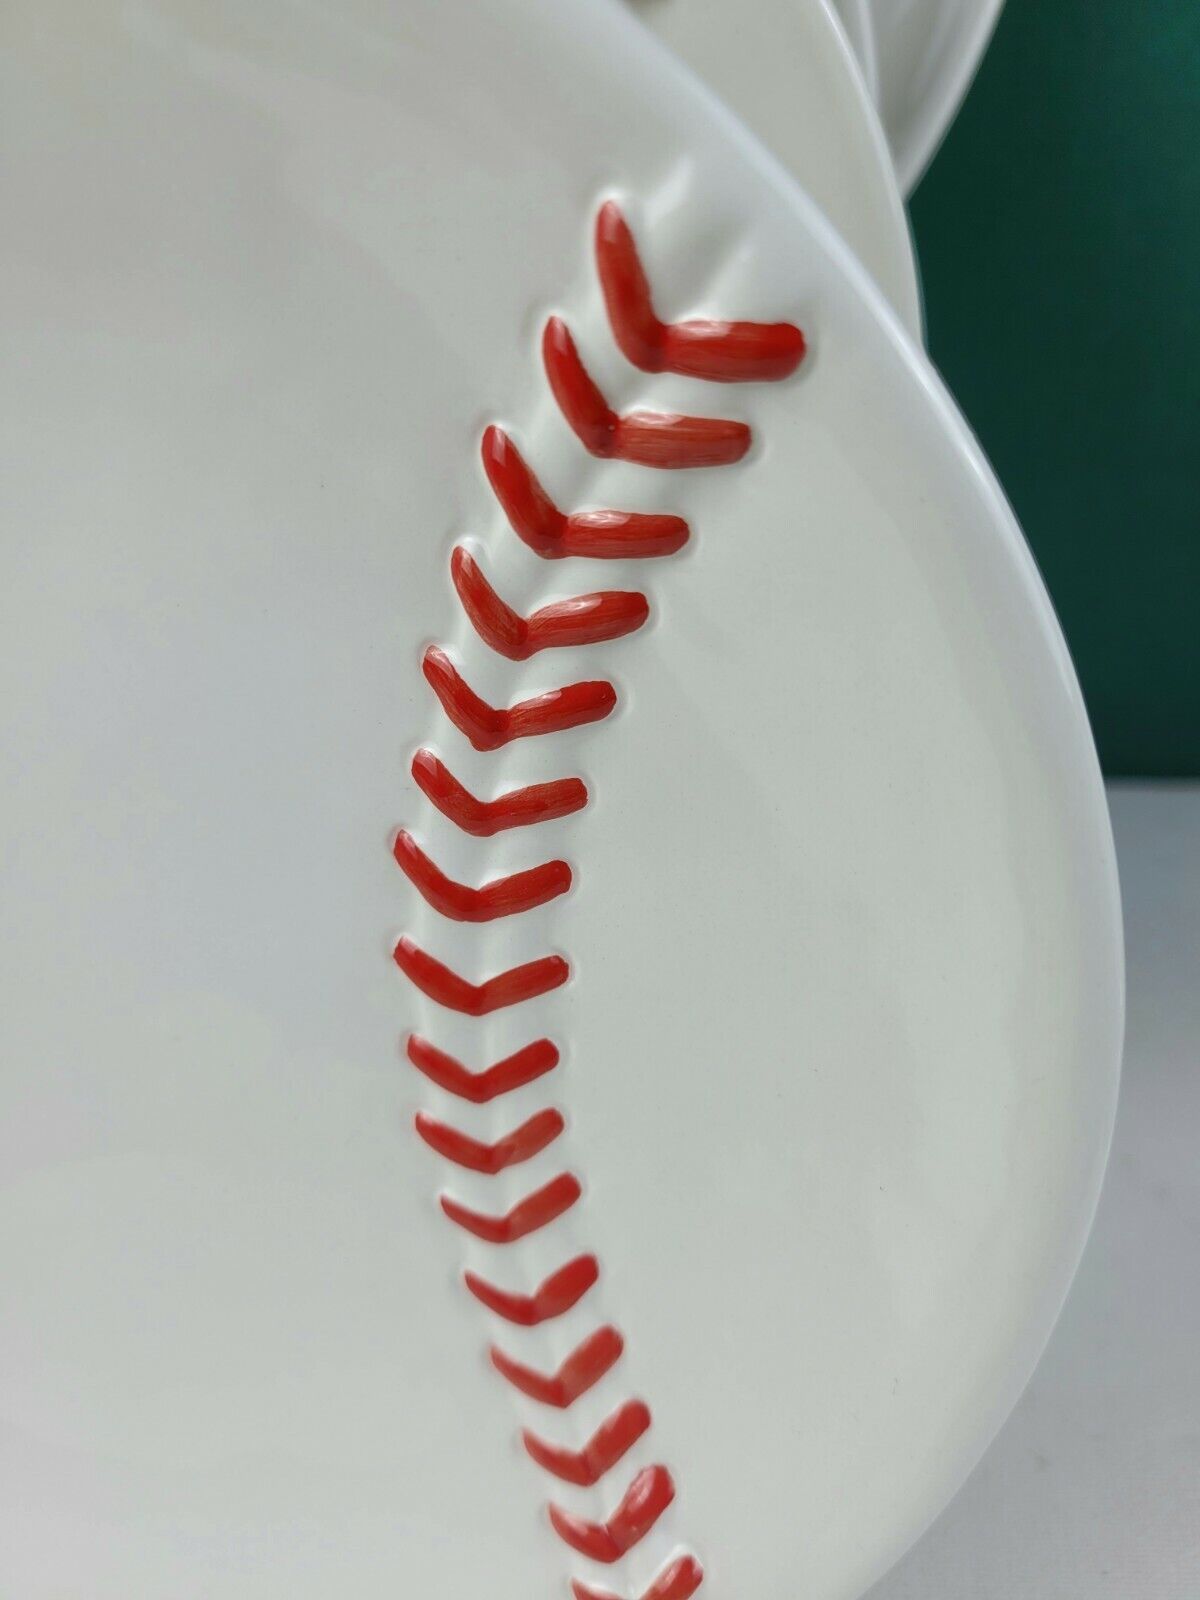 Department 56  Baseball Plate Set - Servin Plate, 4 Salad Plates, 1 Dipping Bowl Popularność wysokiej jakości